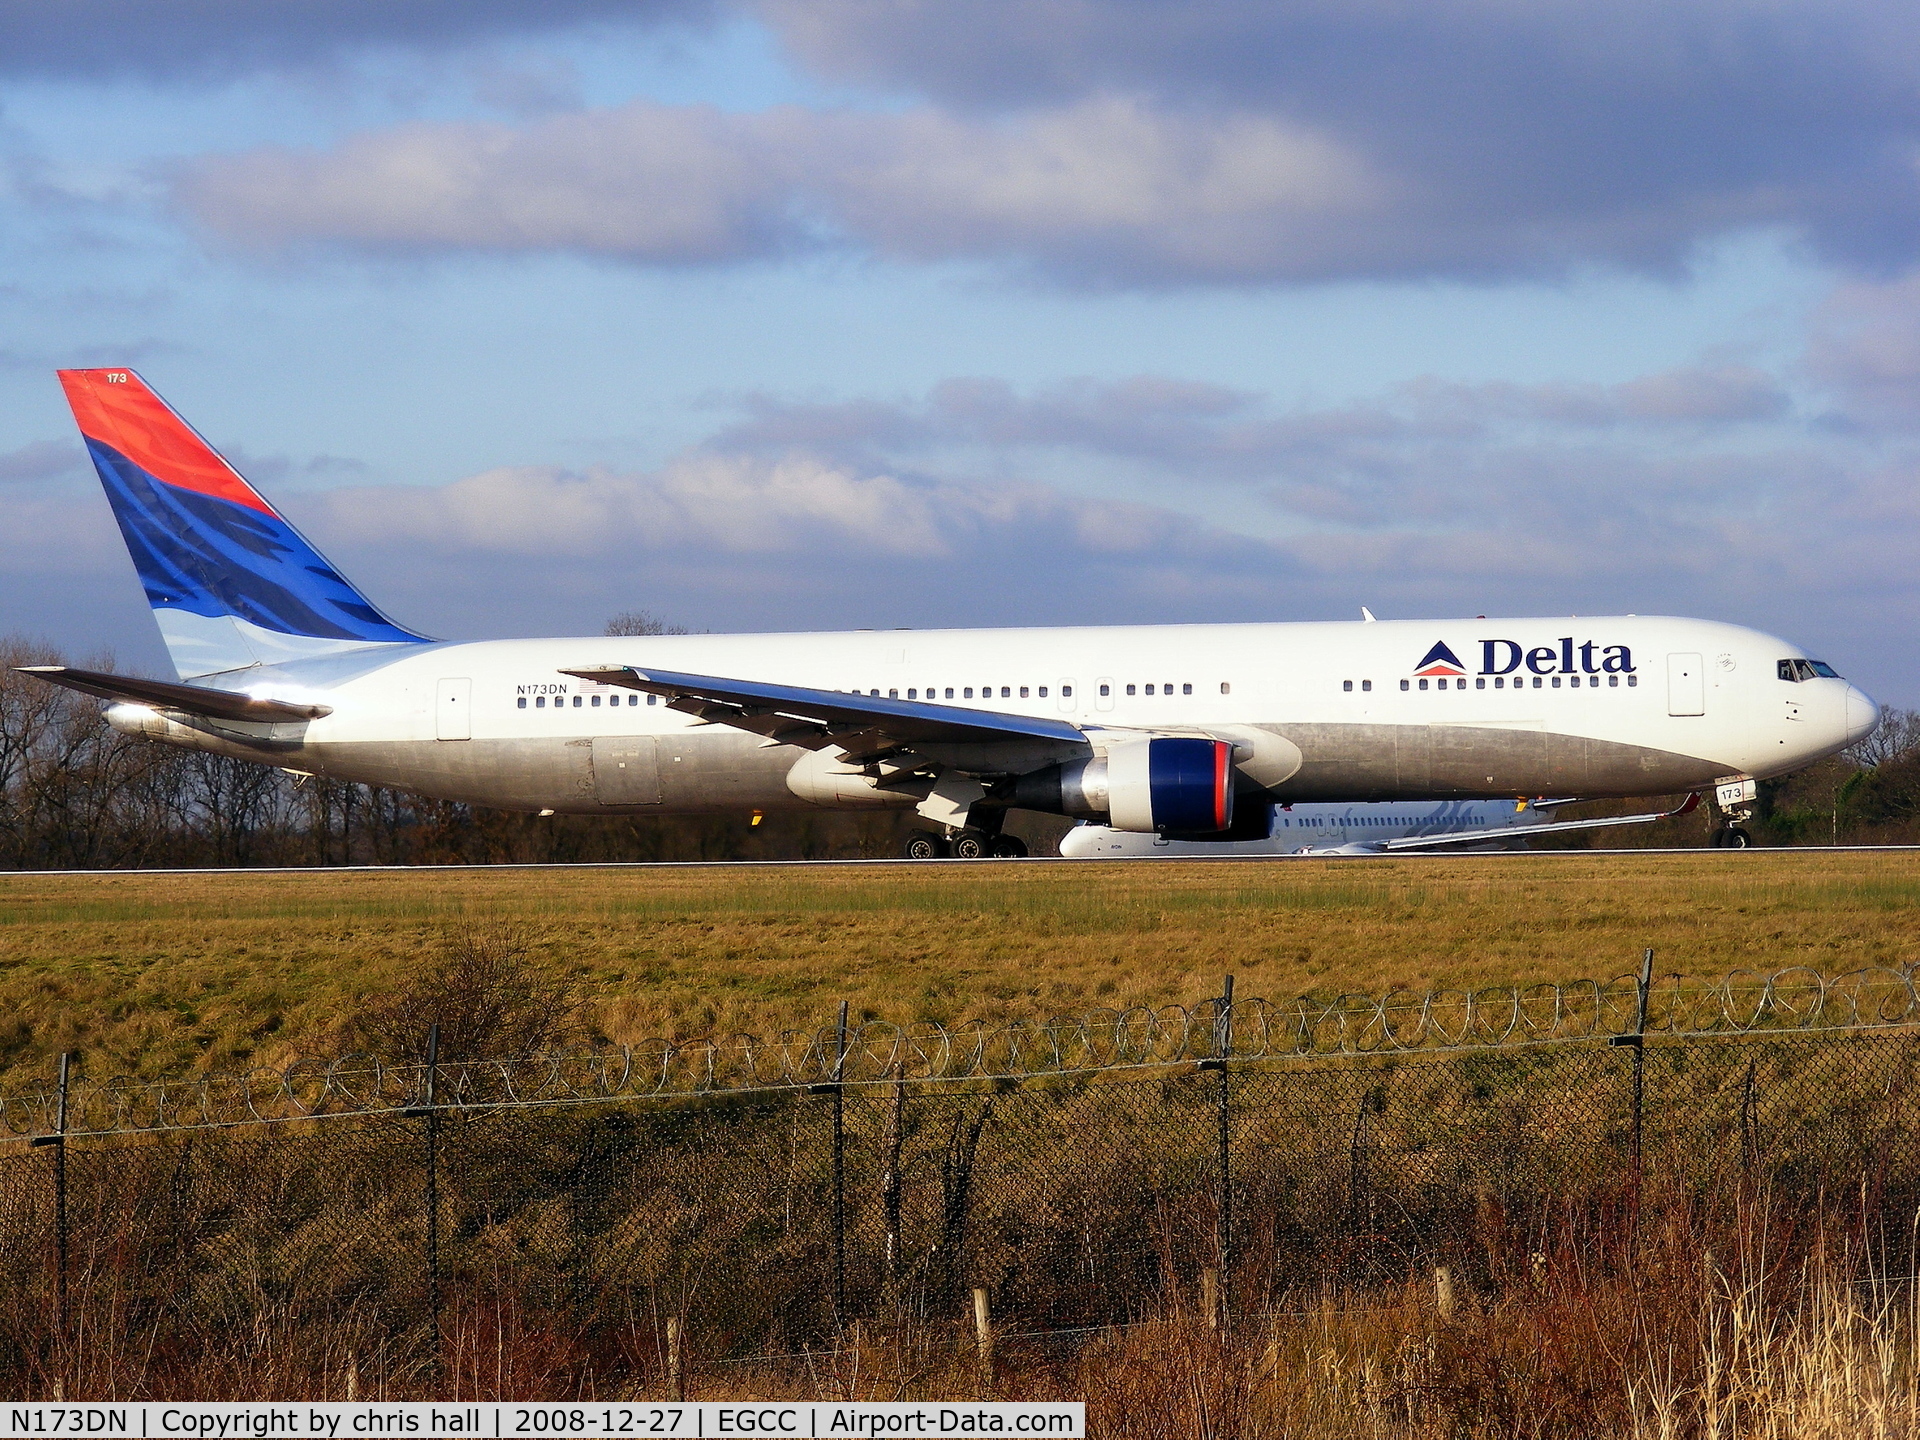 N173DN, 1990 Boeing 767-332 C/N 24800, Delta